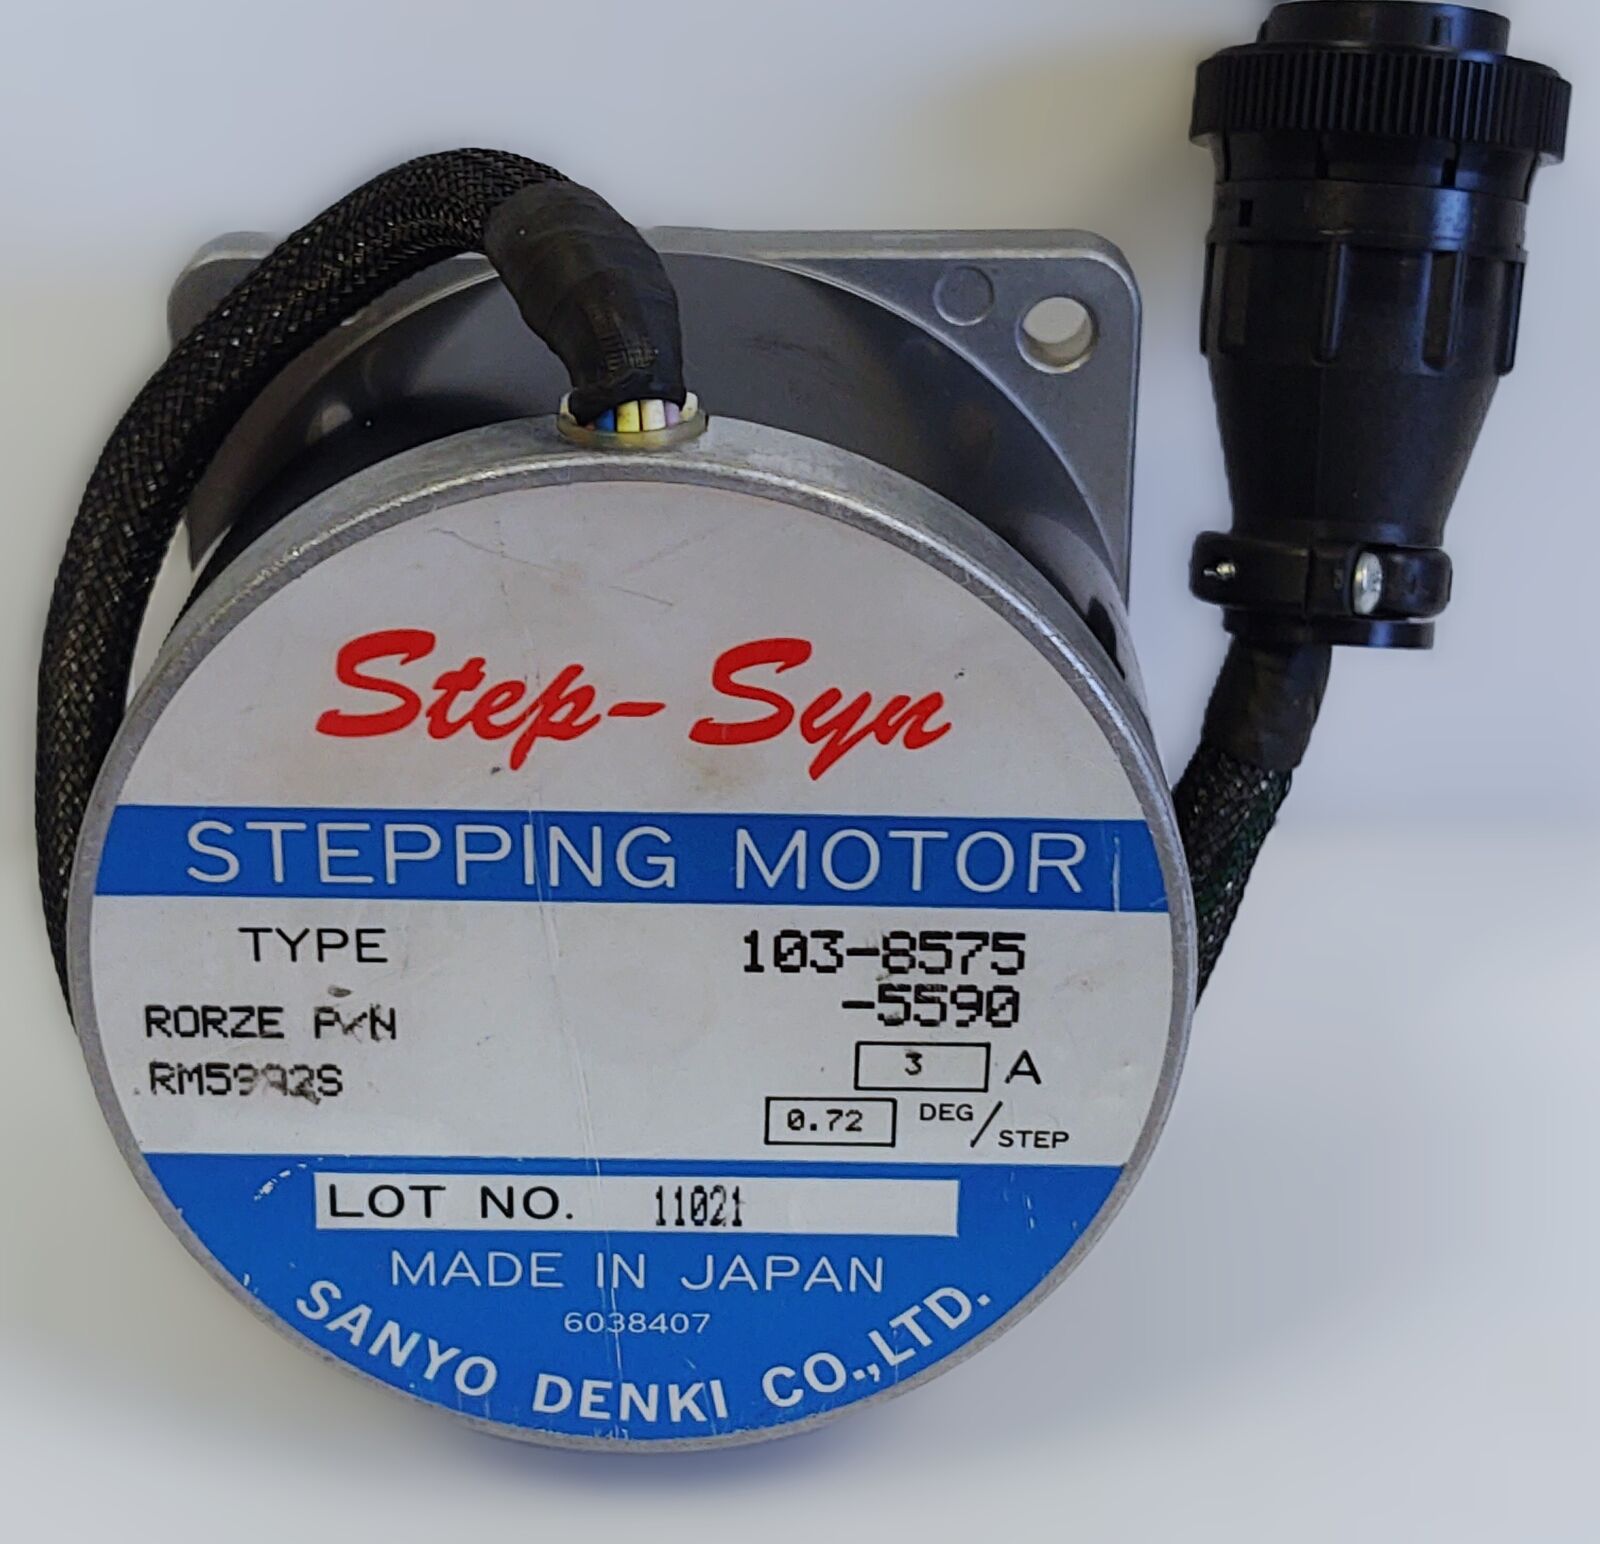 SANYO DENKI 103-8575-5590 Step-Syn Stepping Motor